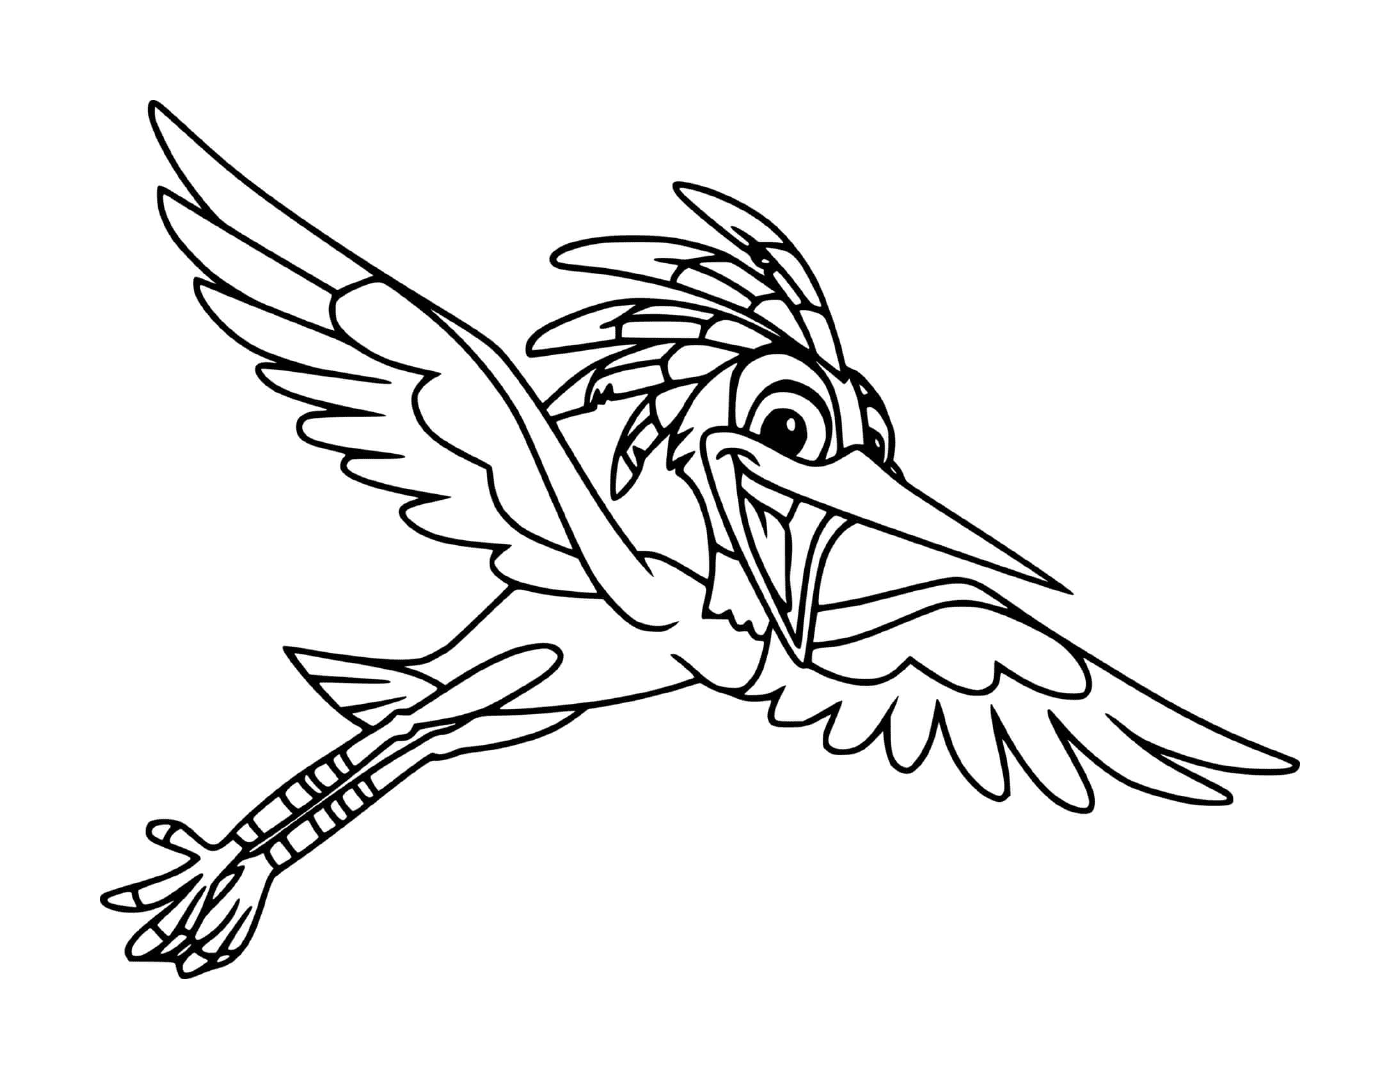  Ono, the egrette that flies 